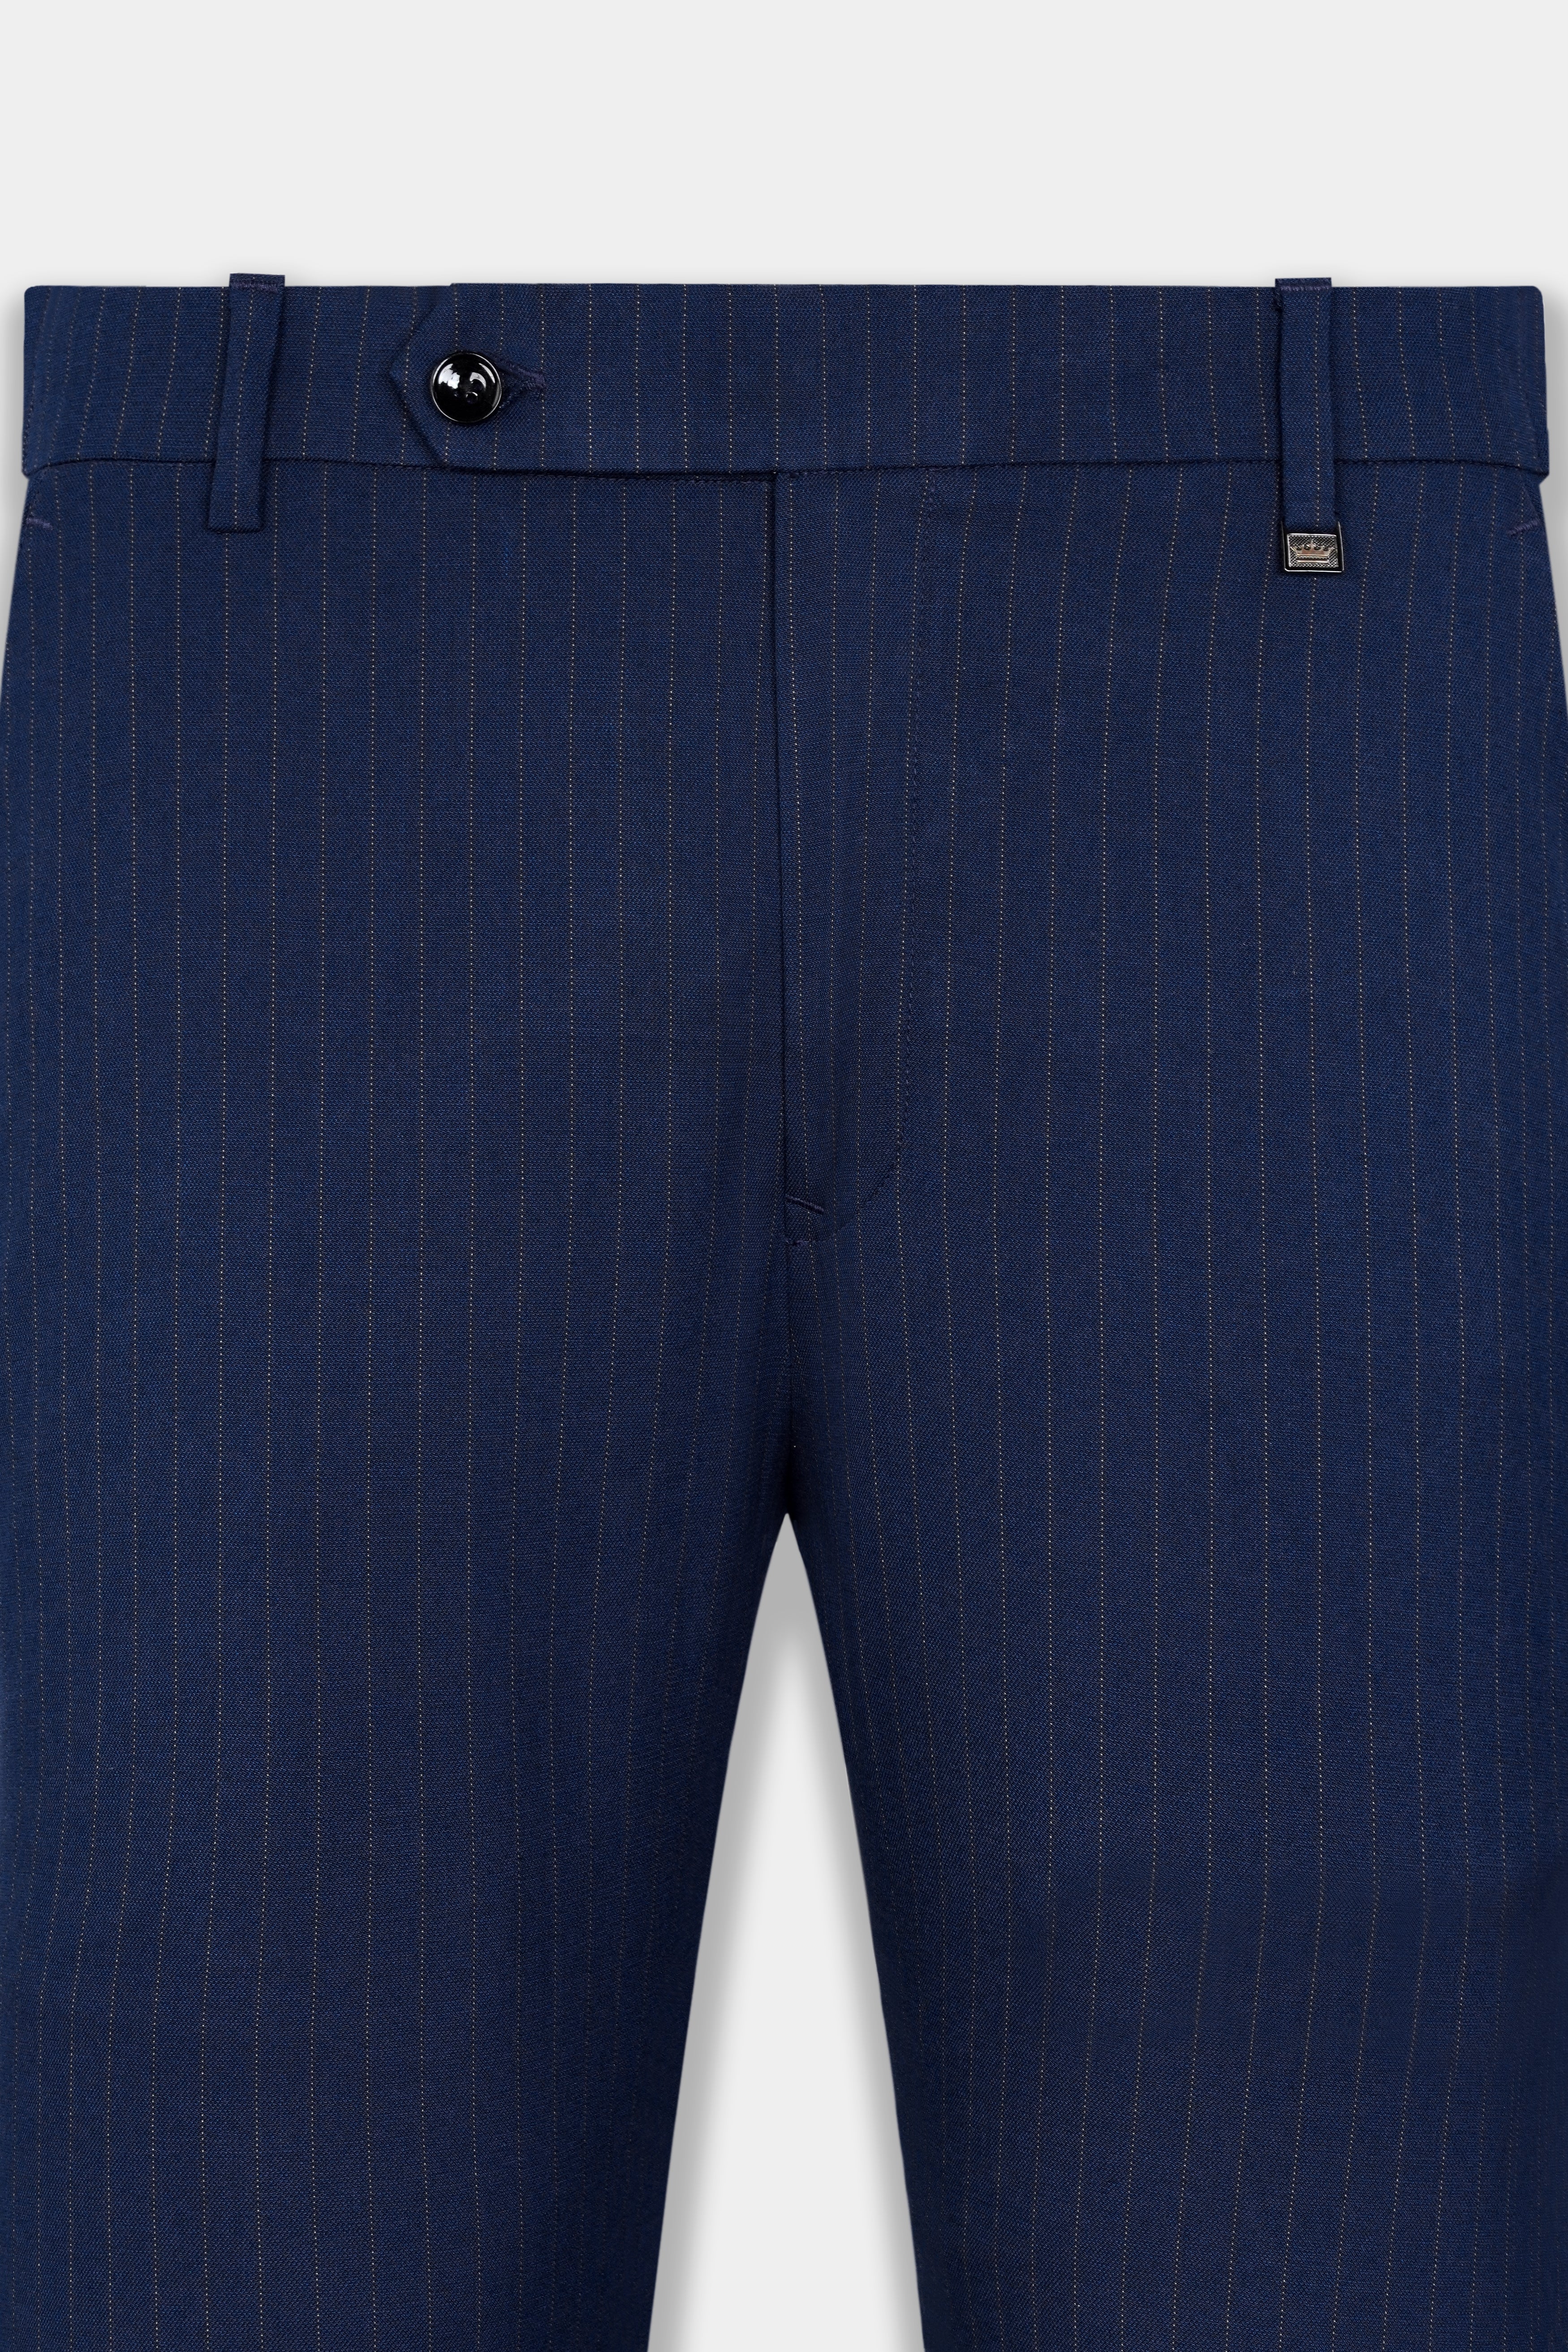 Ebony Clay Blue Striped Wool Rich Stretchable Waistband Pant